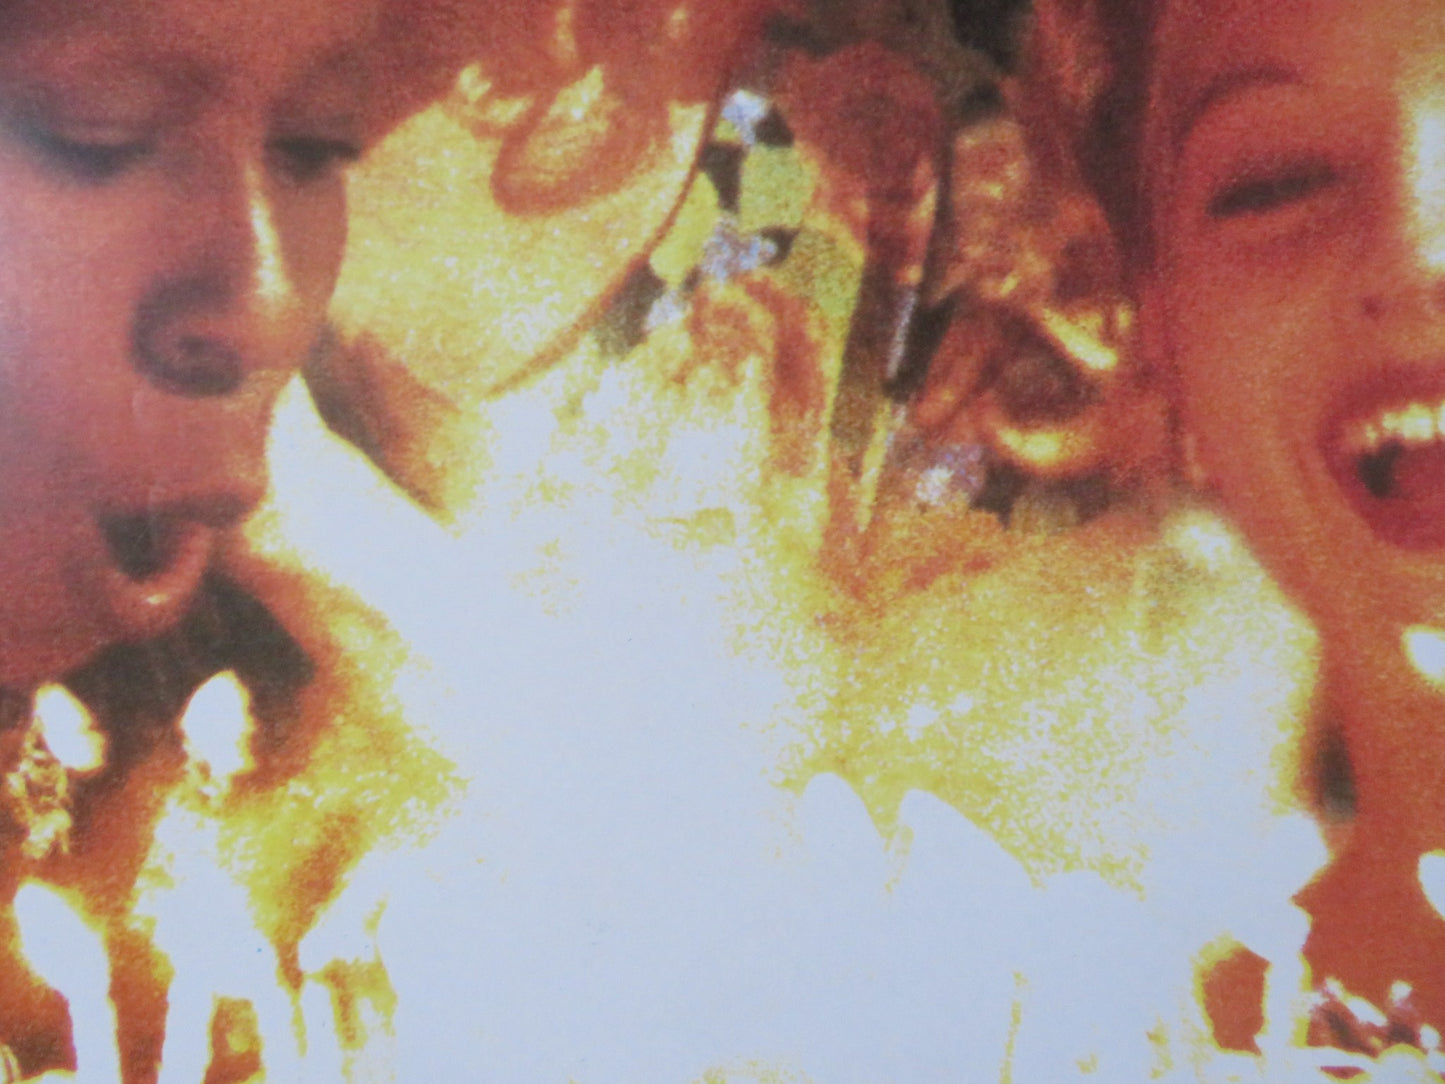 BOYS ON THE SIDE VHS VIDEO POSTER WHOOPI GOLDBERG DREW BARRYMORE 1995